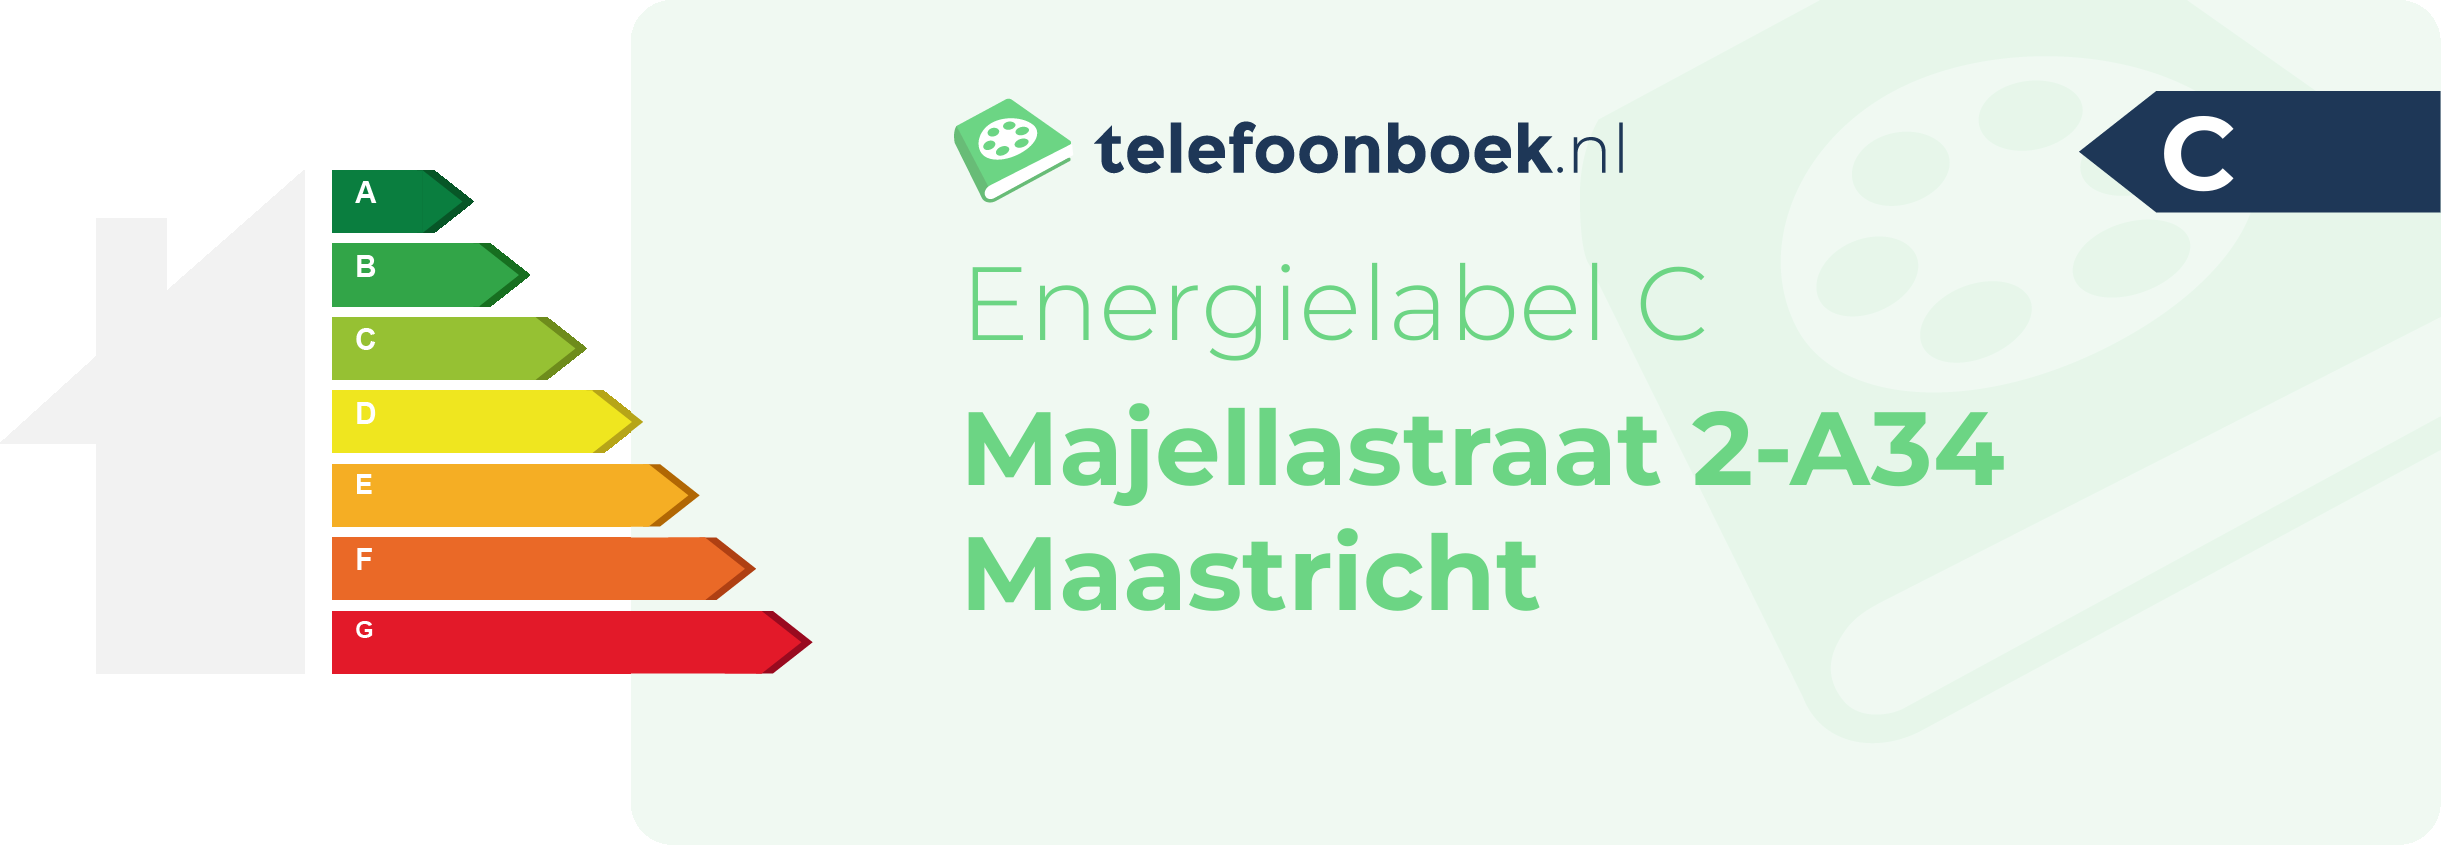 Energielabel Majellastraat 2-A34 Maastricht